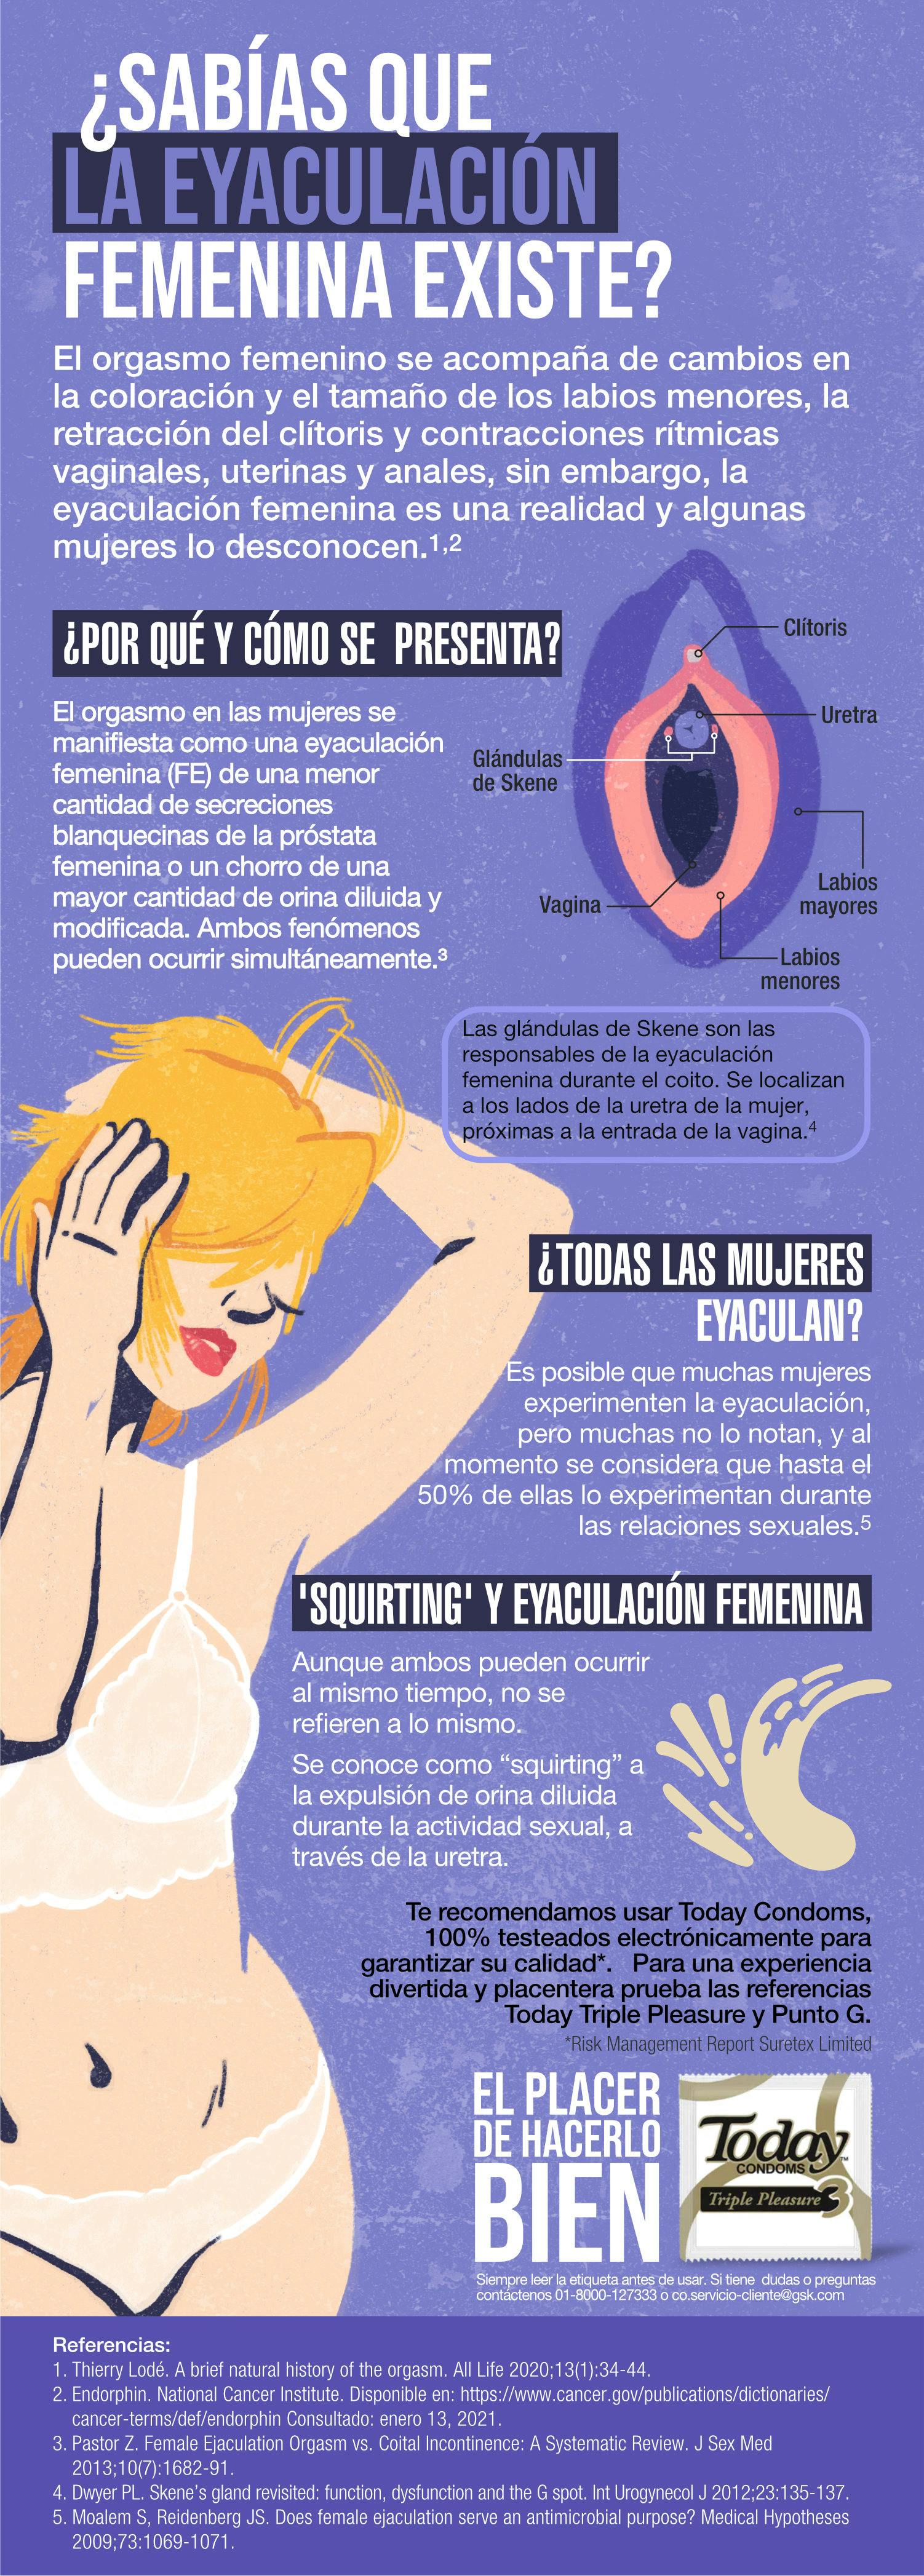 Sabías que la eyaculación femenina existe?